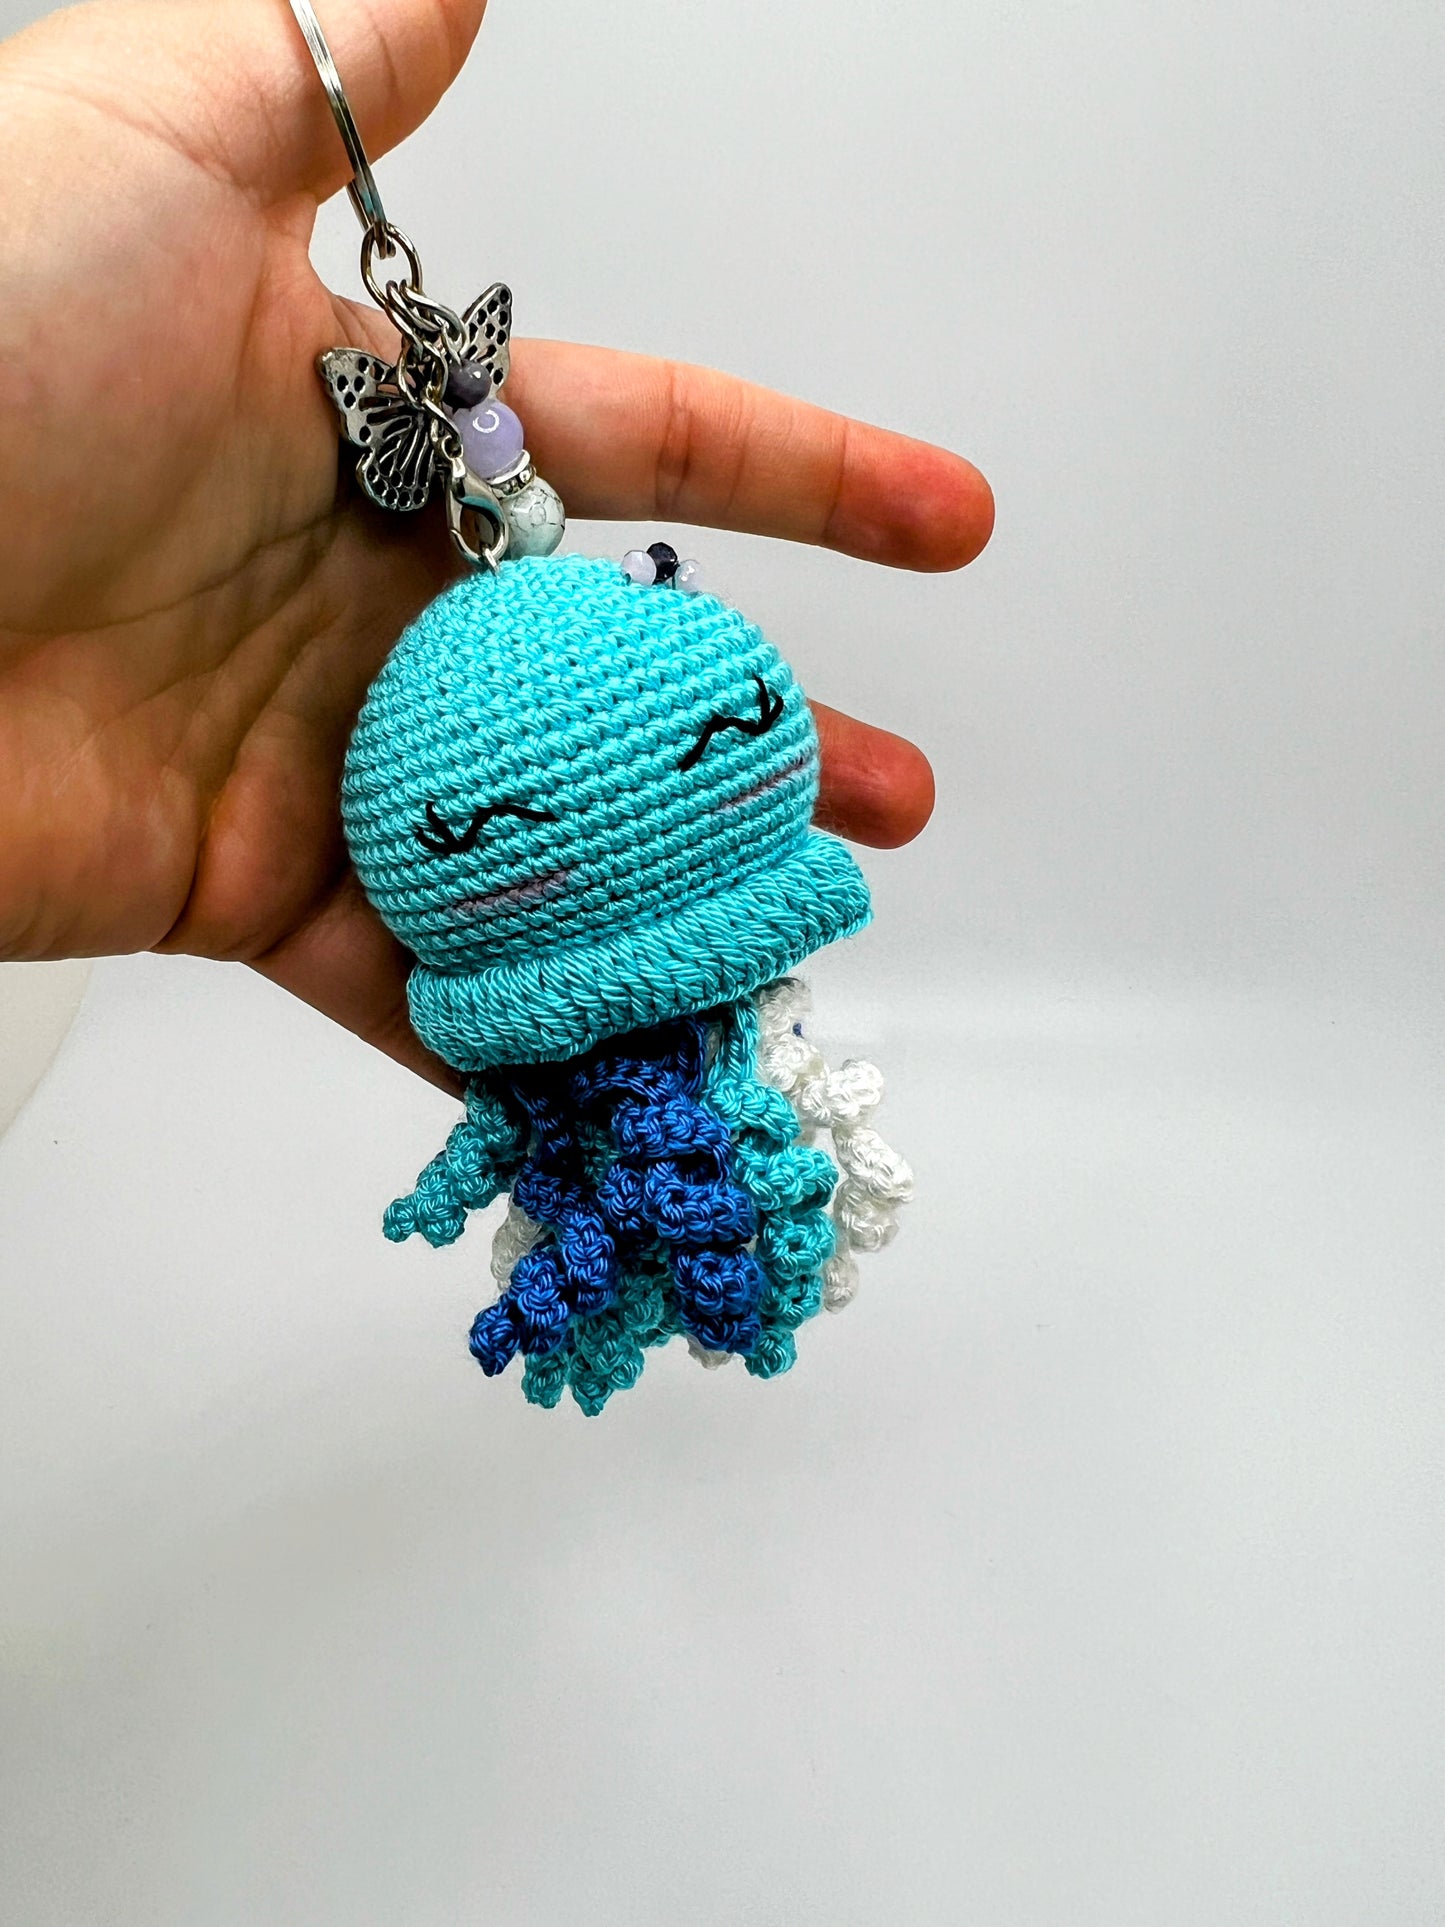 Stuffed Jellyfish Keychain Toy - (Blue & Pink) - Crochet Knitted Amigurumi Toy